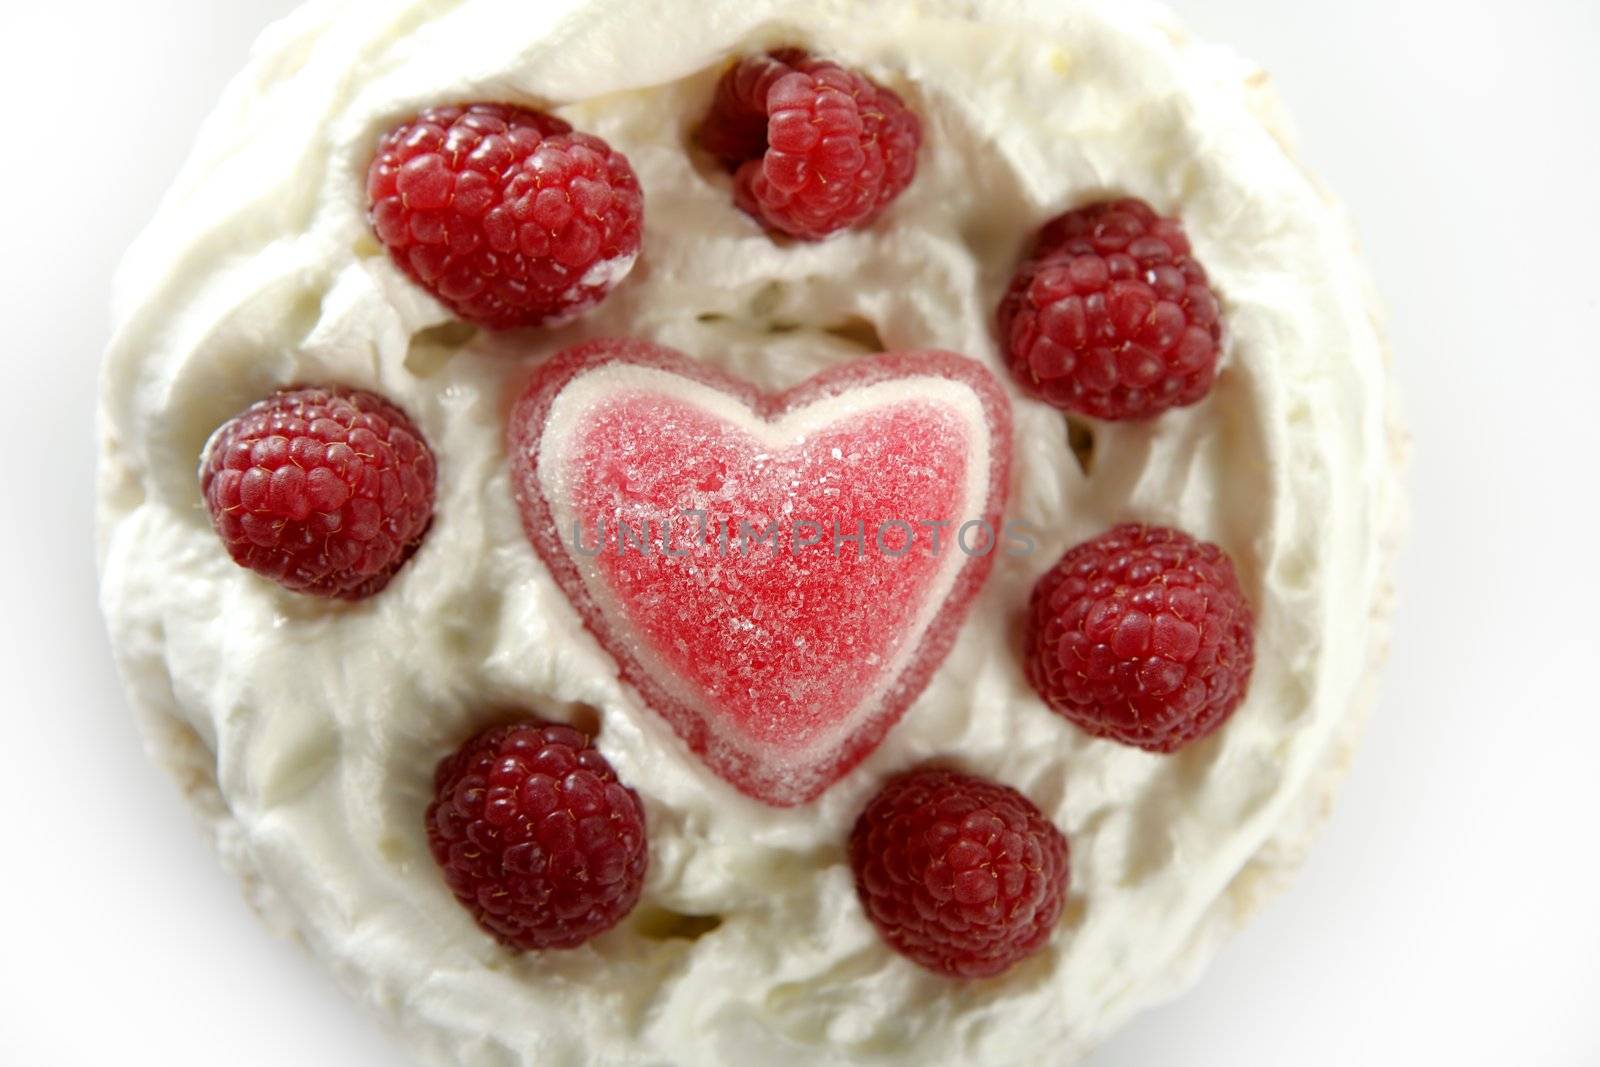 Jelly hearth cream cake with raspberries. Valentines day